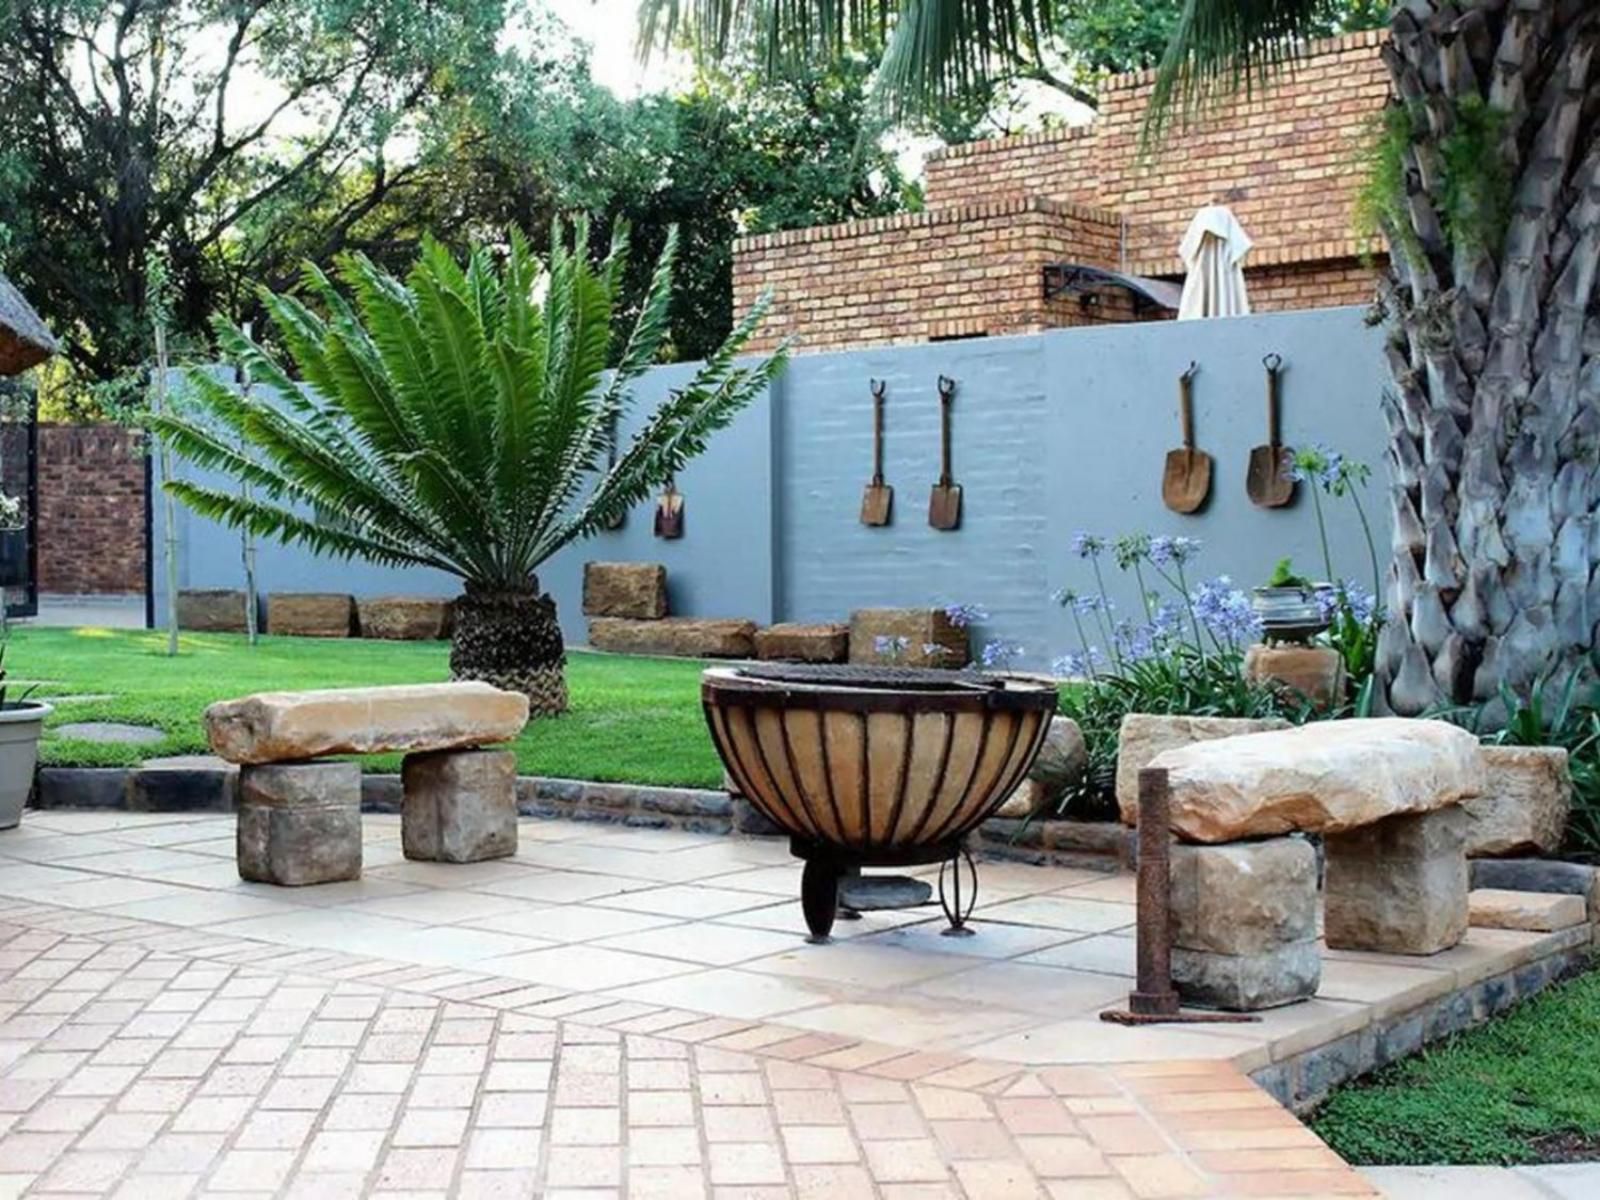 Home In The East Garsfontein Pretoria Tshwane Gauteng South Africa Garden, Nature, Plant